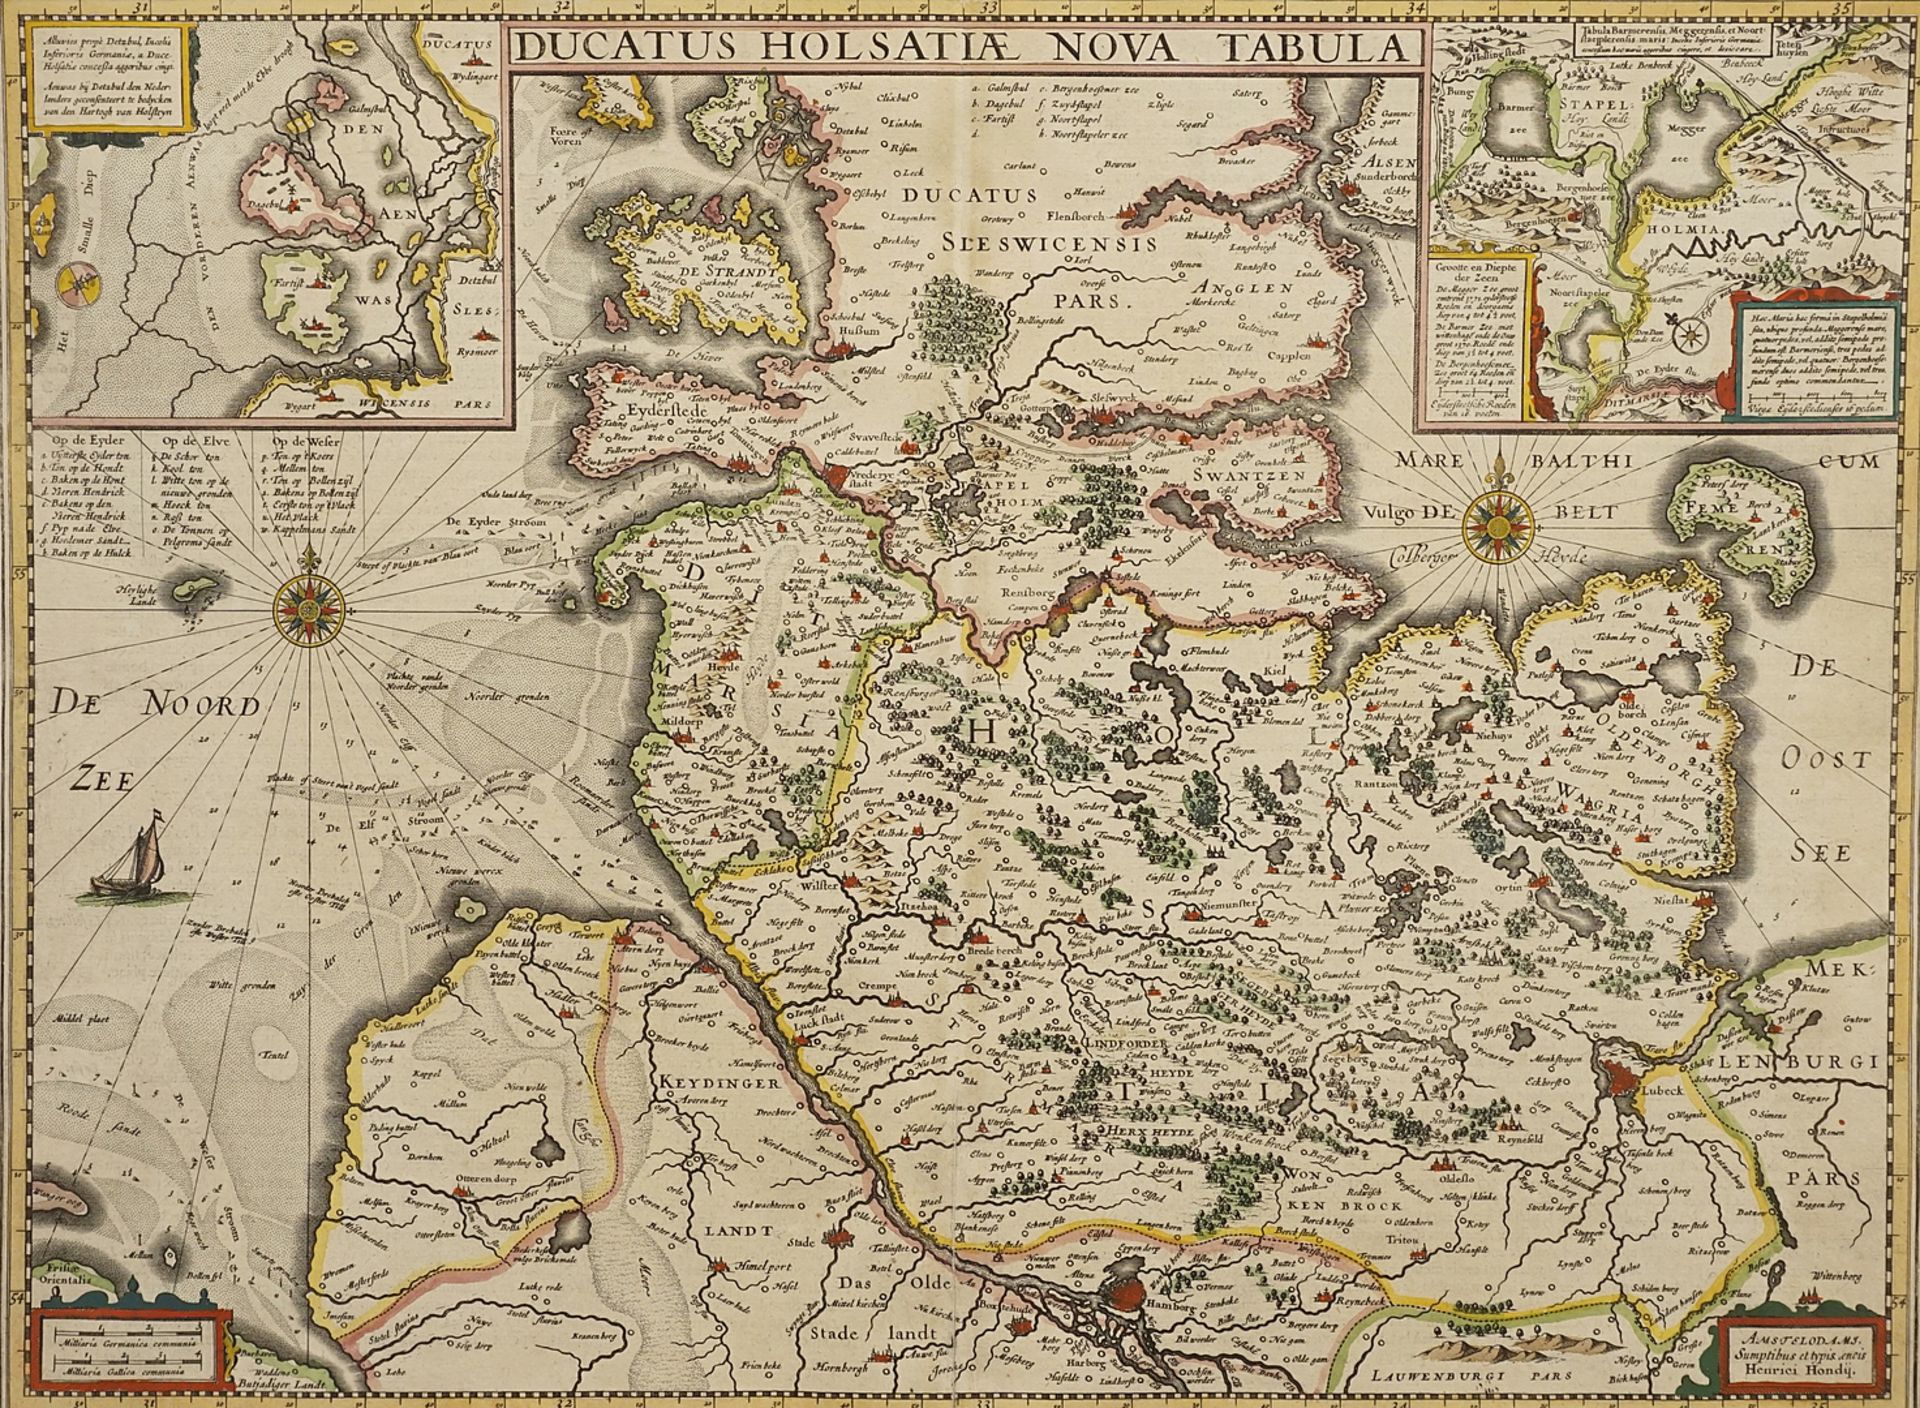 Henricus Hondius (1597-1651), "Ducatus Holsatiae nova tabula" (New Map of the Duchy of Holstein)